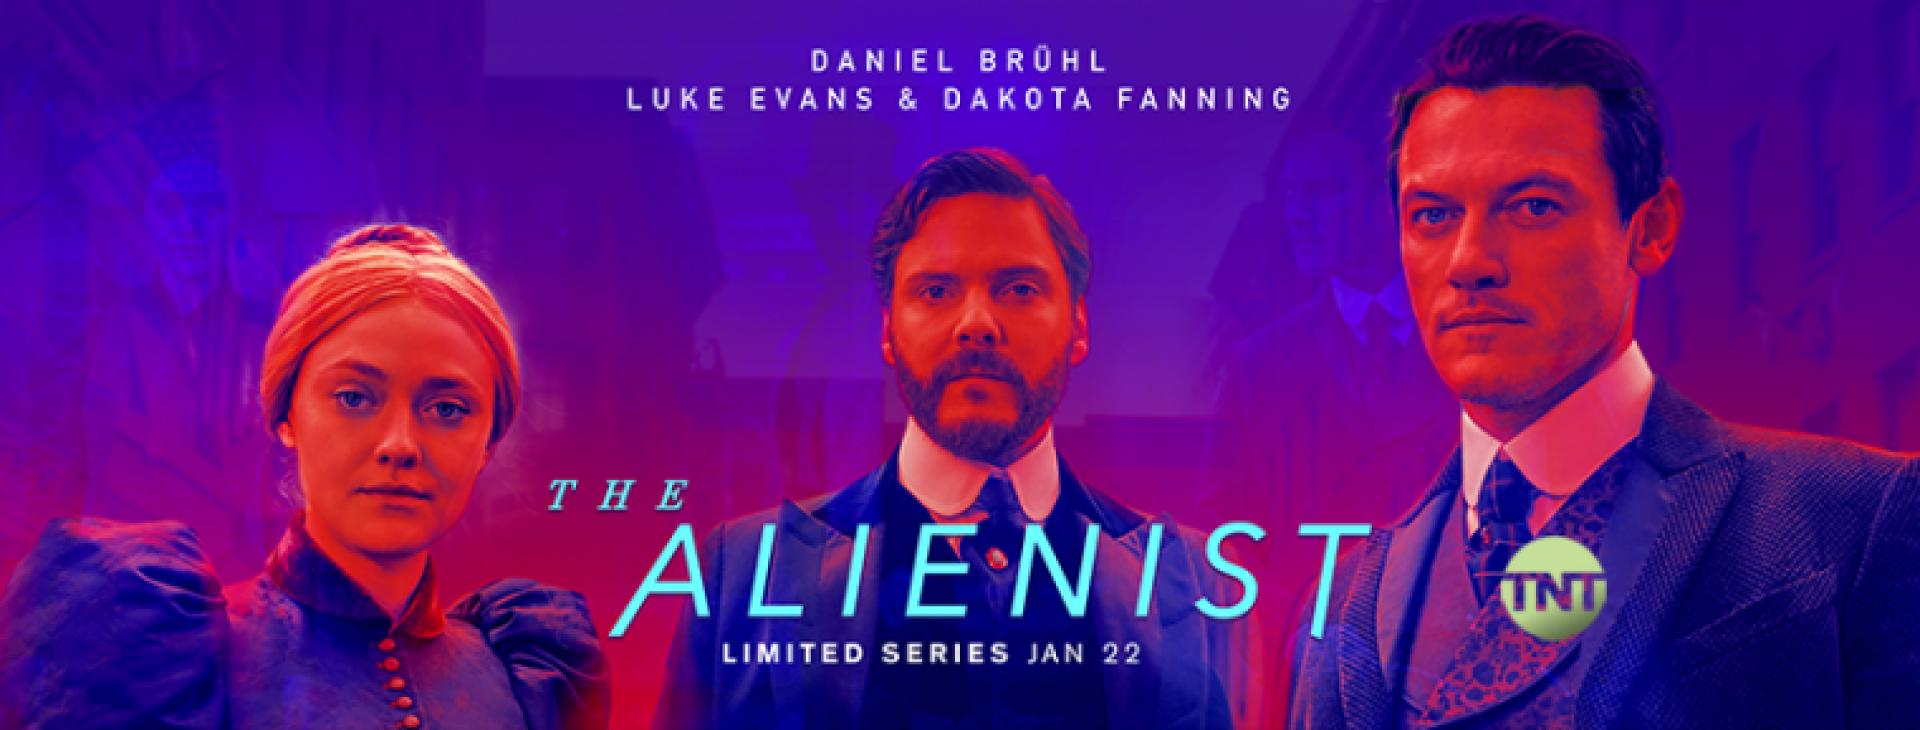 The Alienist (2018) - 1x04-06